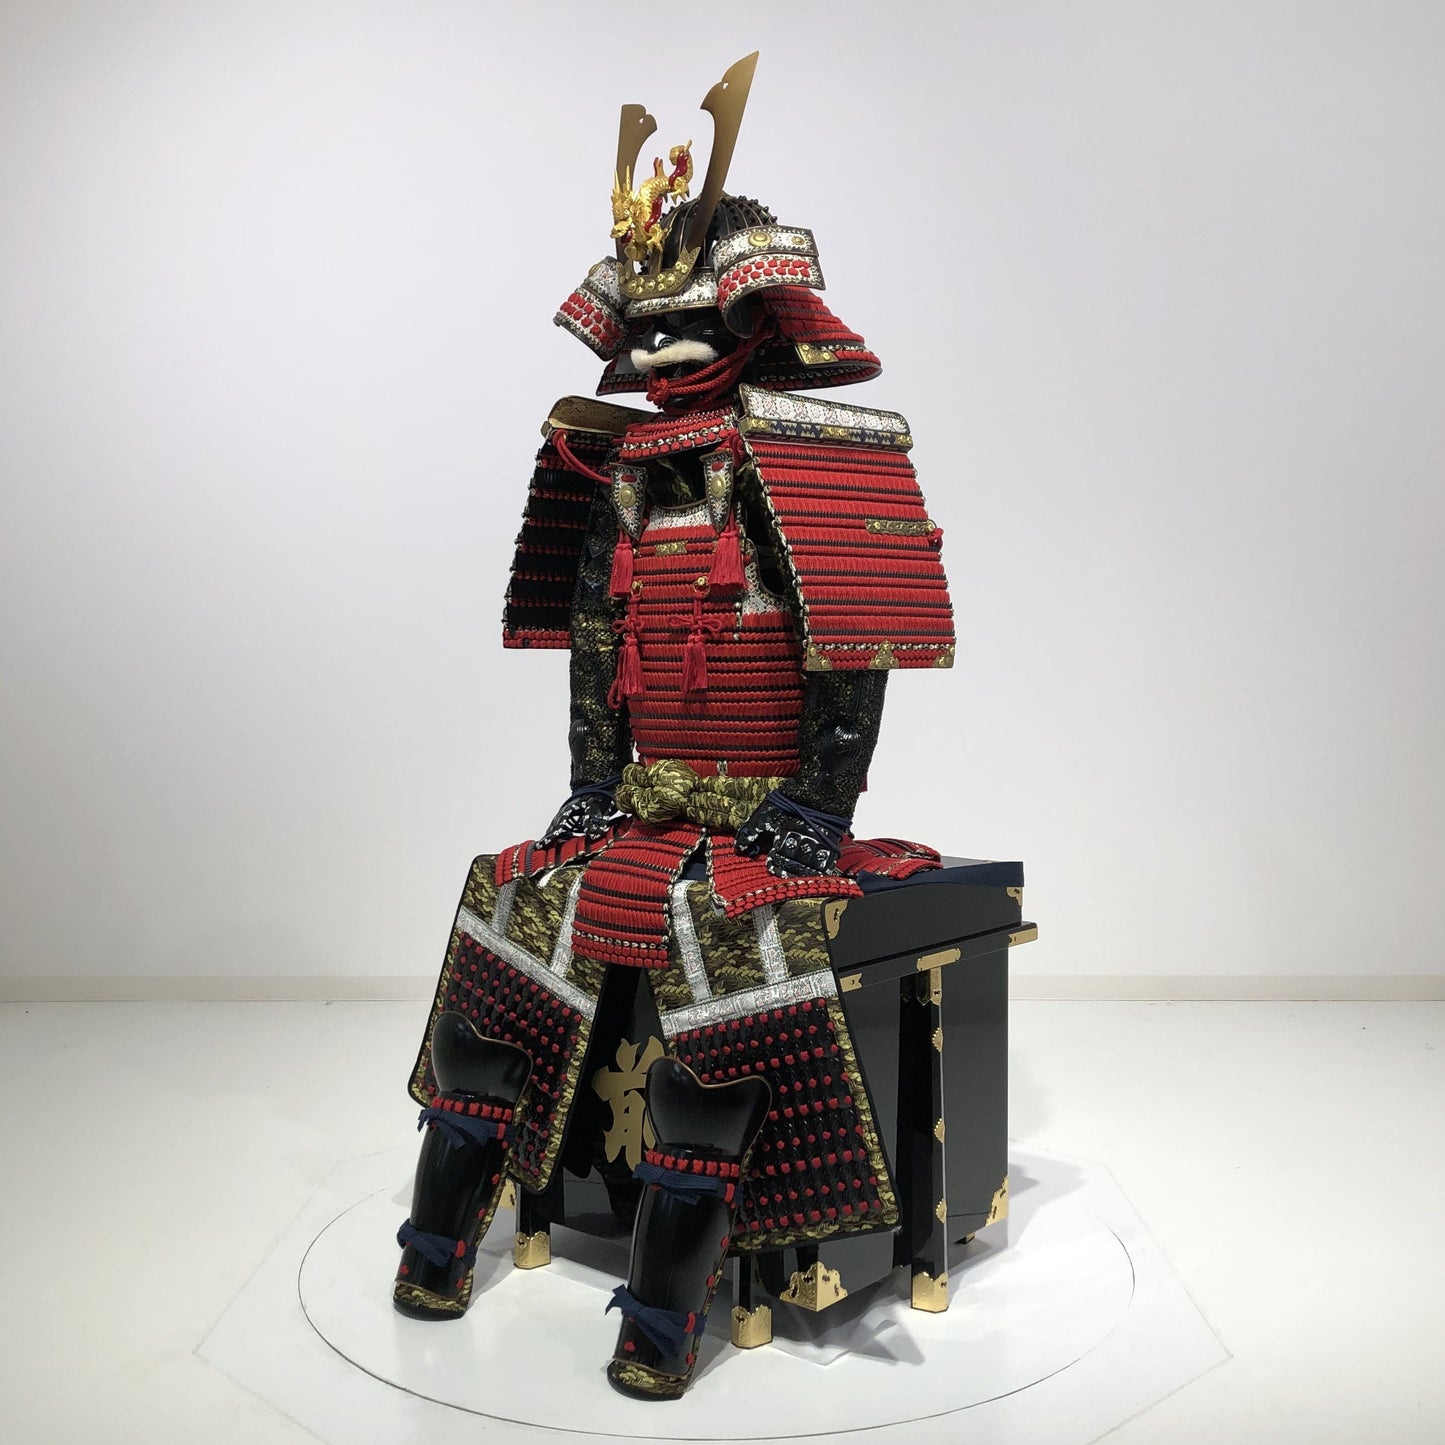 【O-014】Red Thread Odoshi / Kebiki Armor